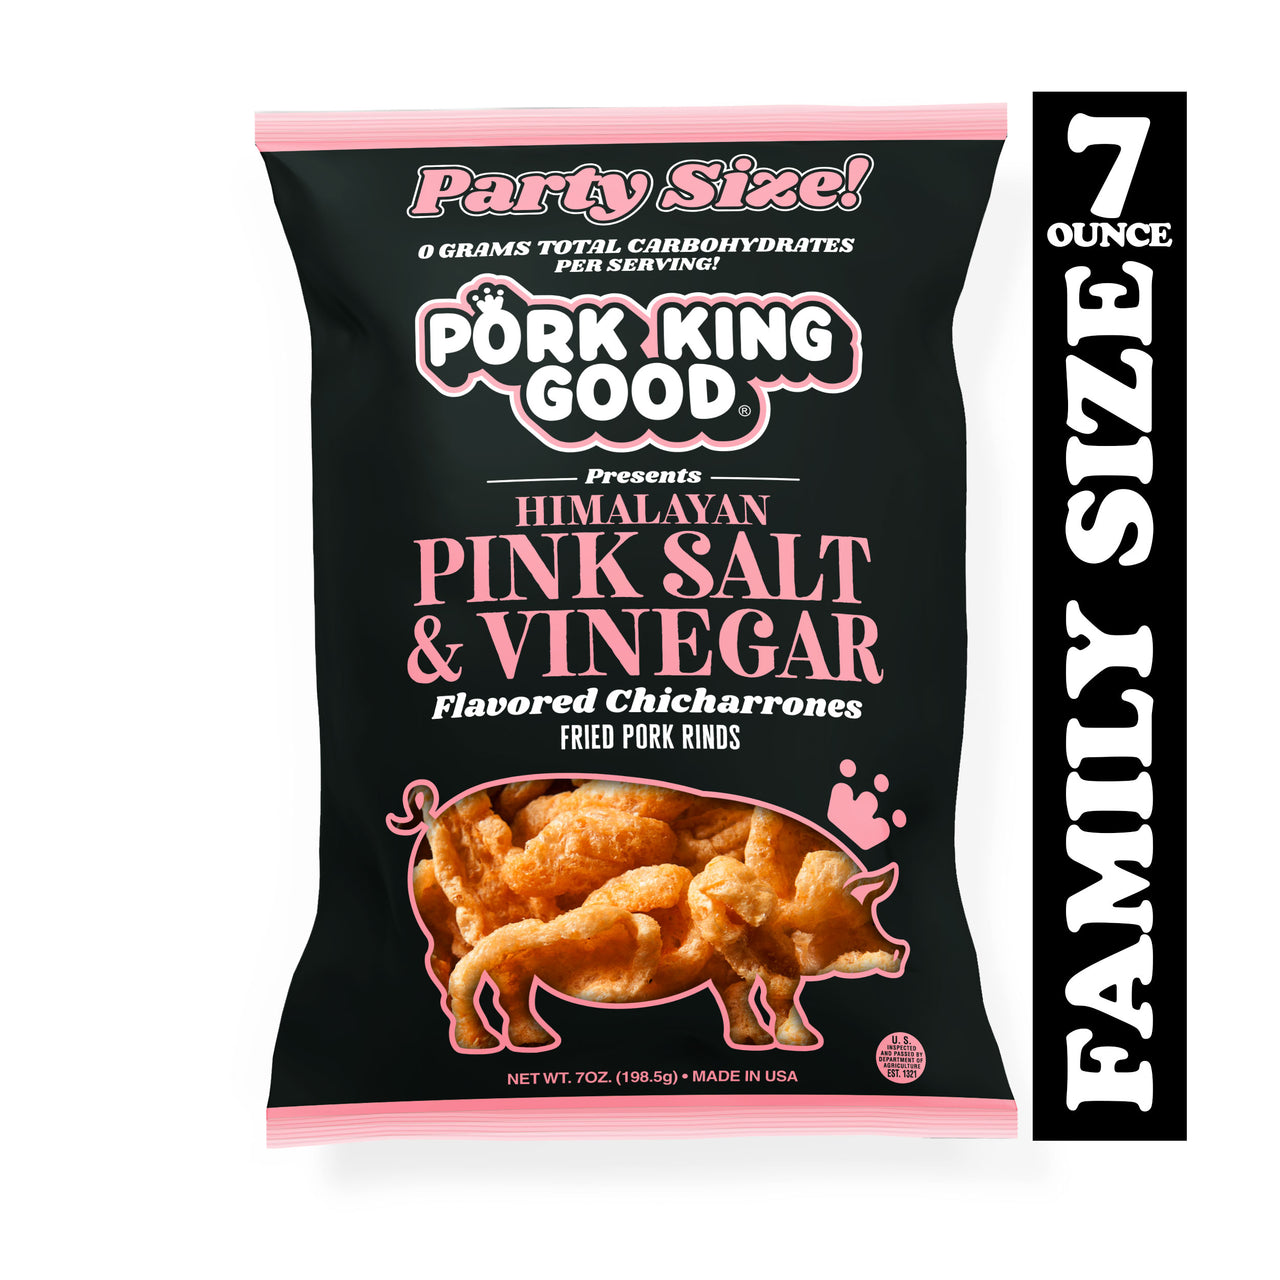 Pork King Good Himalayan Pink Salt & Vinegar Pork Rinds 7oz Party Size Bags